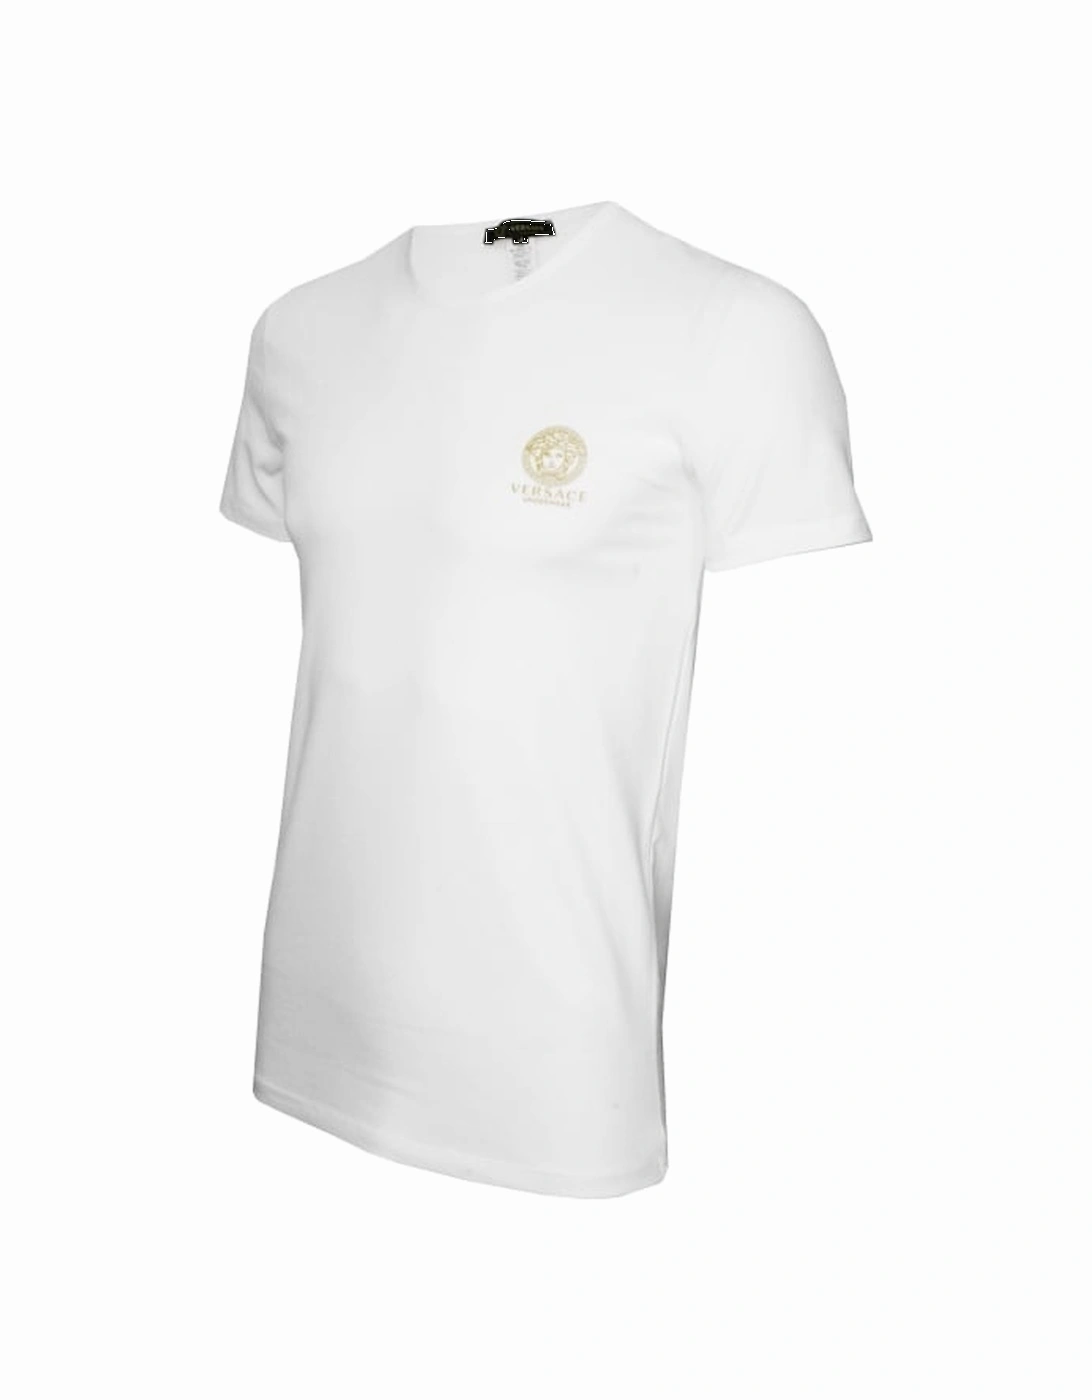 Medusa T-Shirt, White